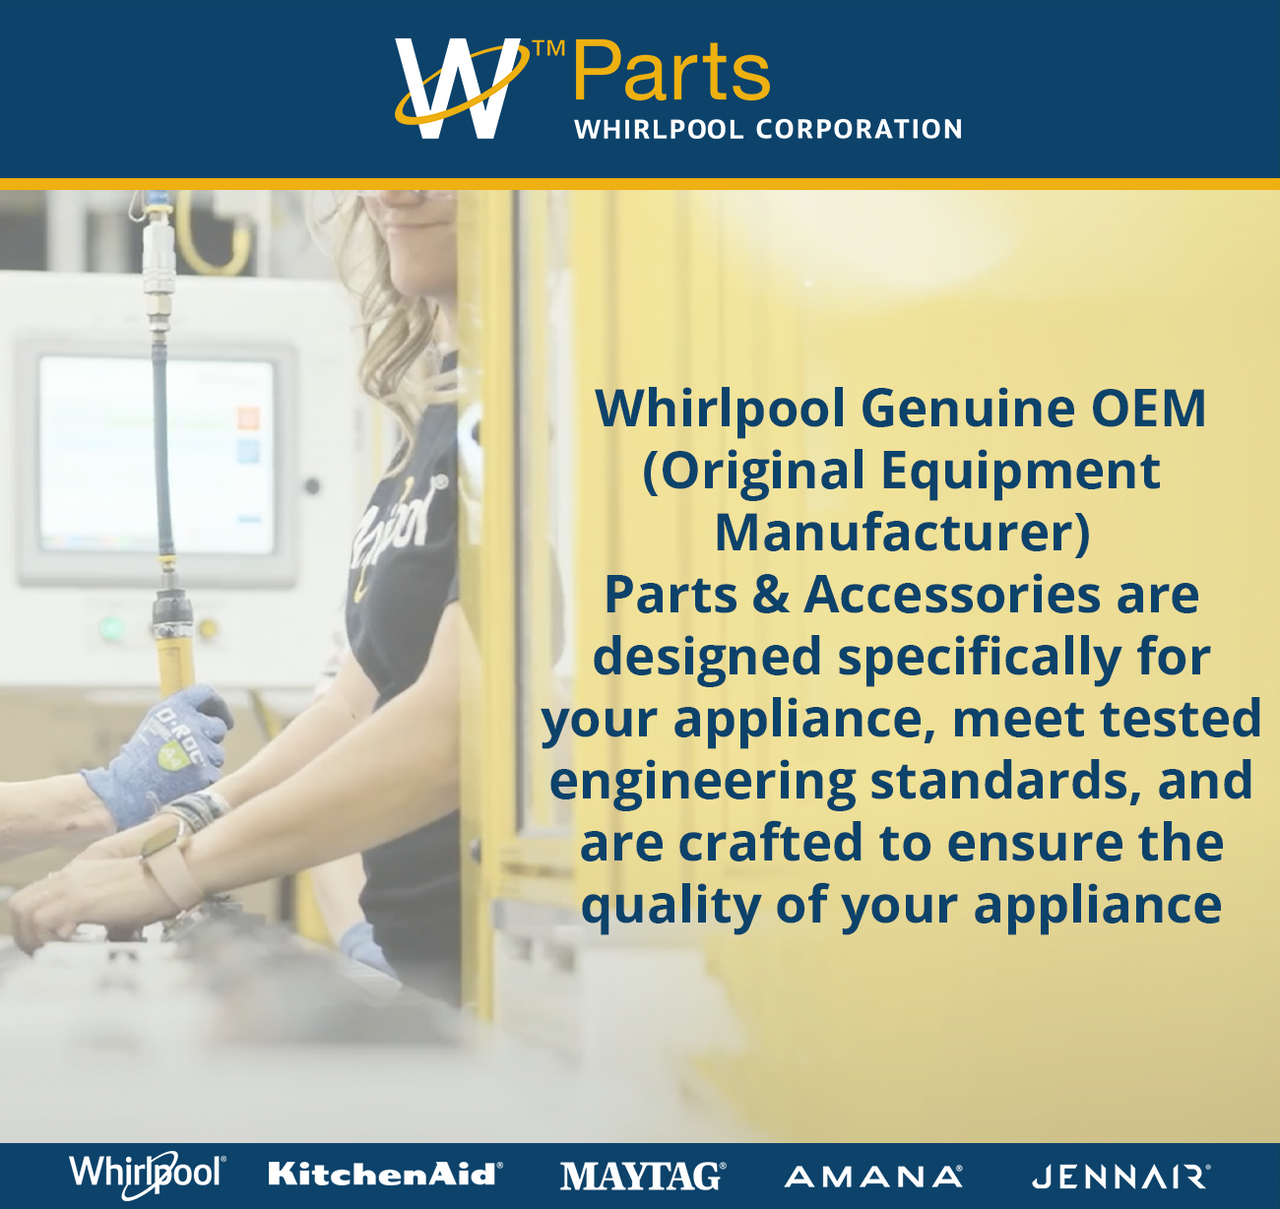 Whirlpool WP8268655 - Dishwasher Upper Dishrack Roller Assembly - Whirlpool Genuine Part Badge